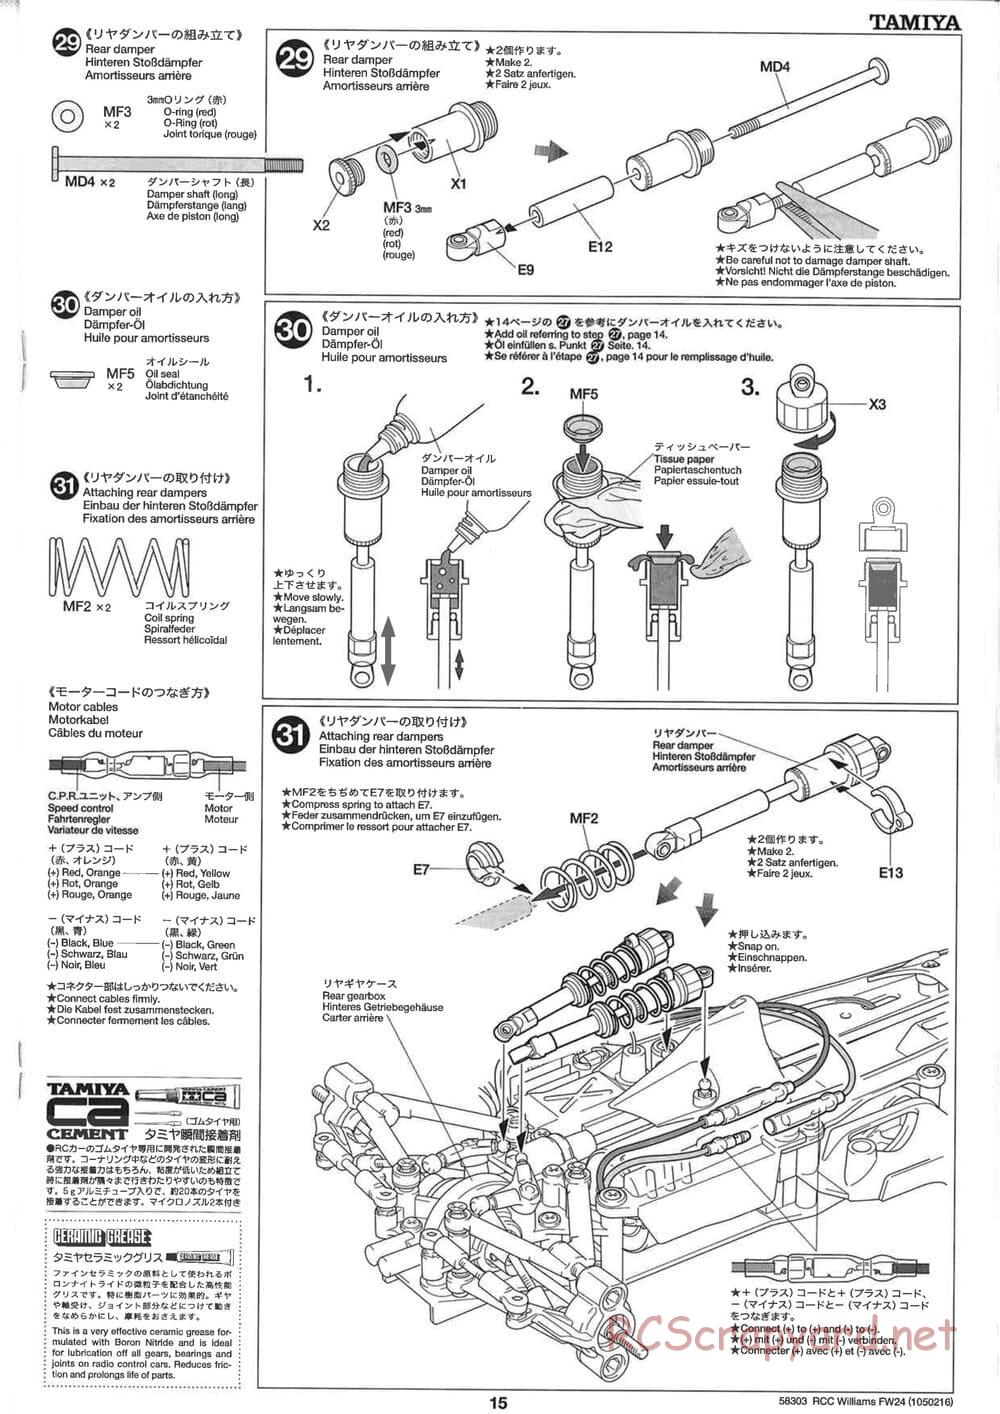 Tamiya - Williams F1 BMW FW24 - F201 Chassis - Manual - Page 15